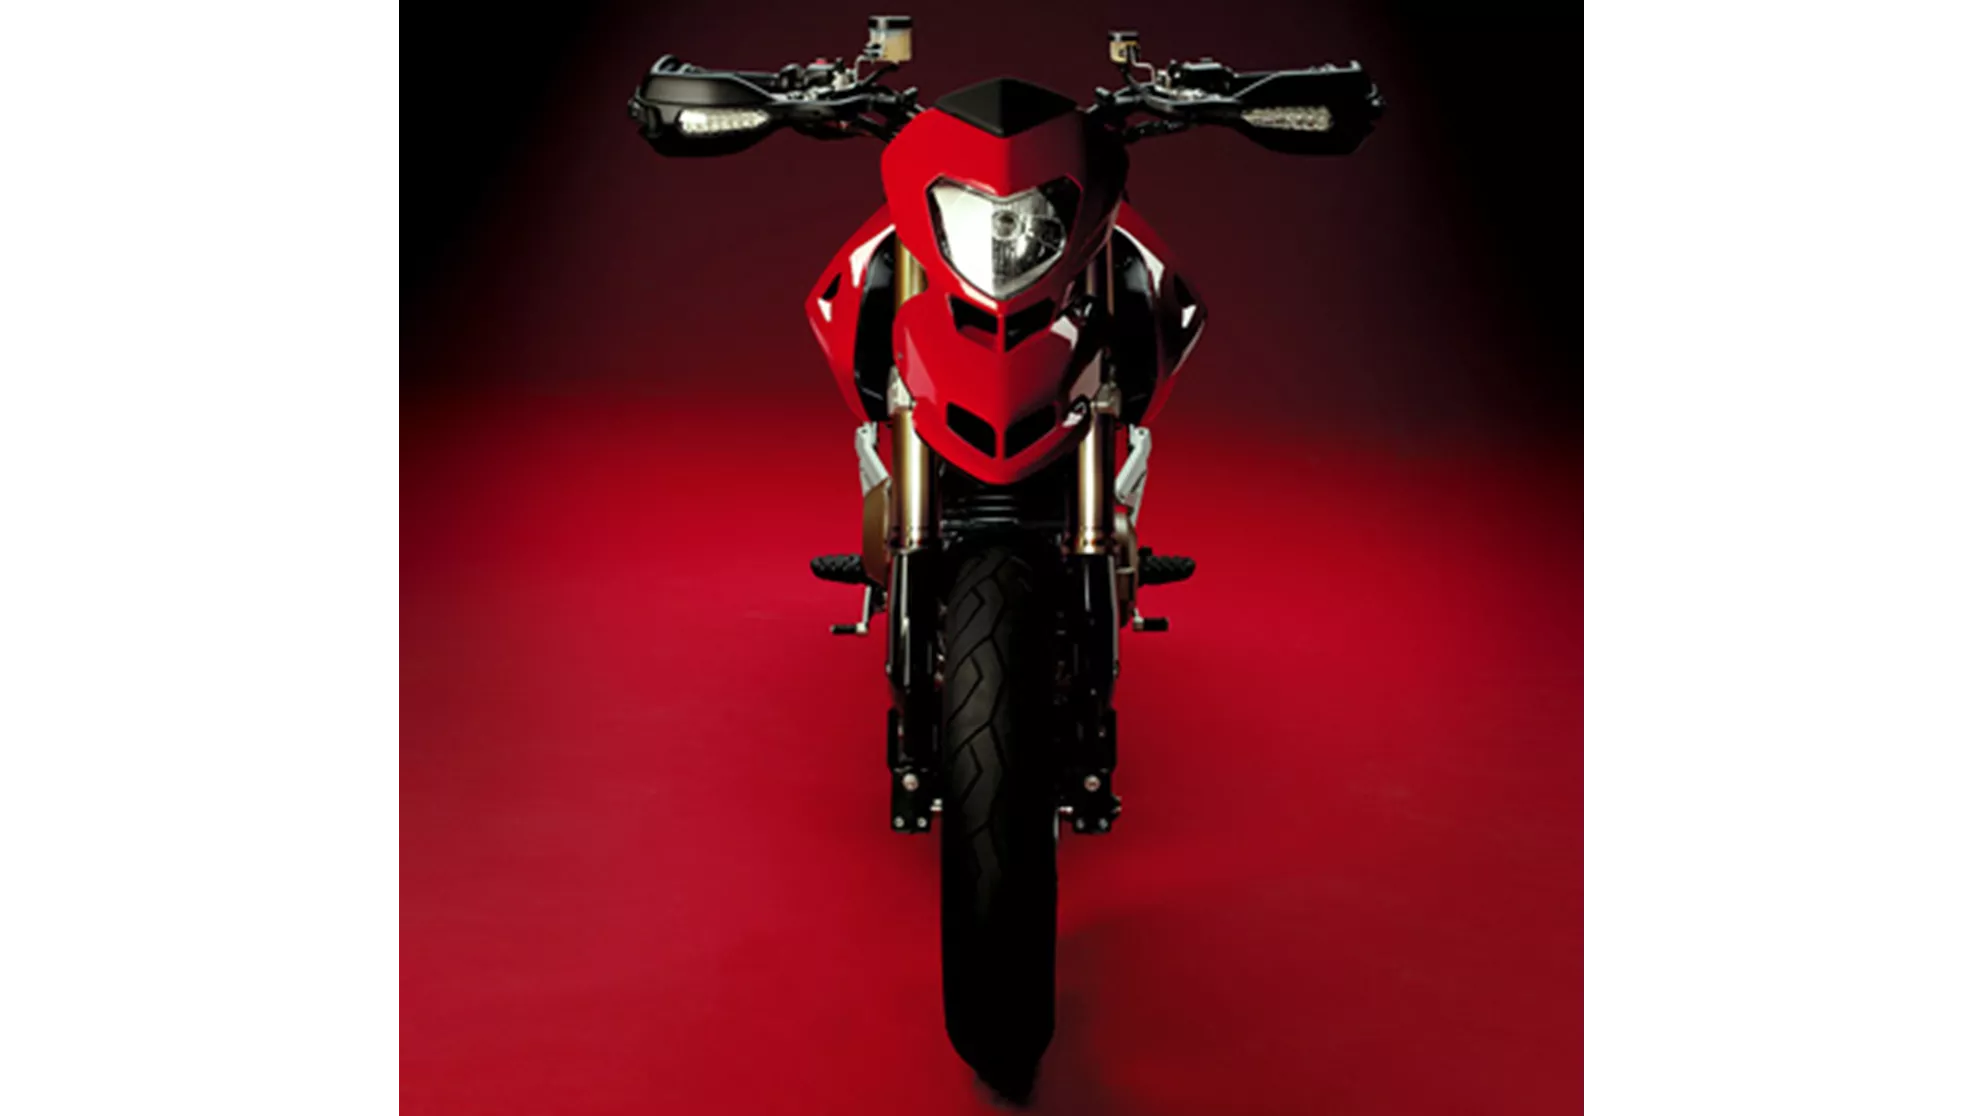 Ducati Hypermotard 1100 S - Image 2